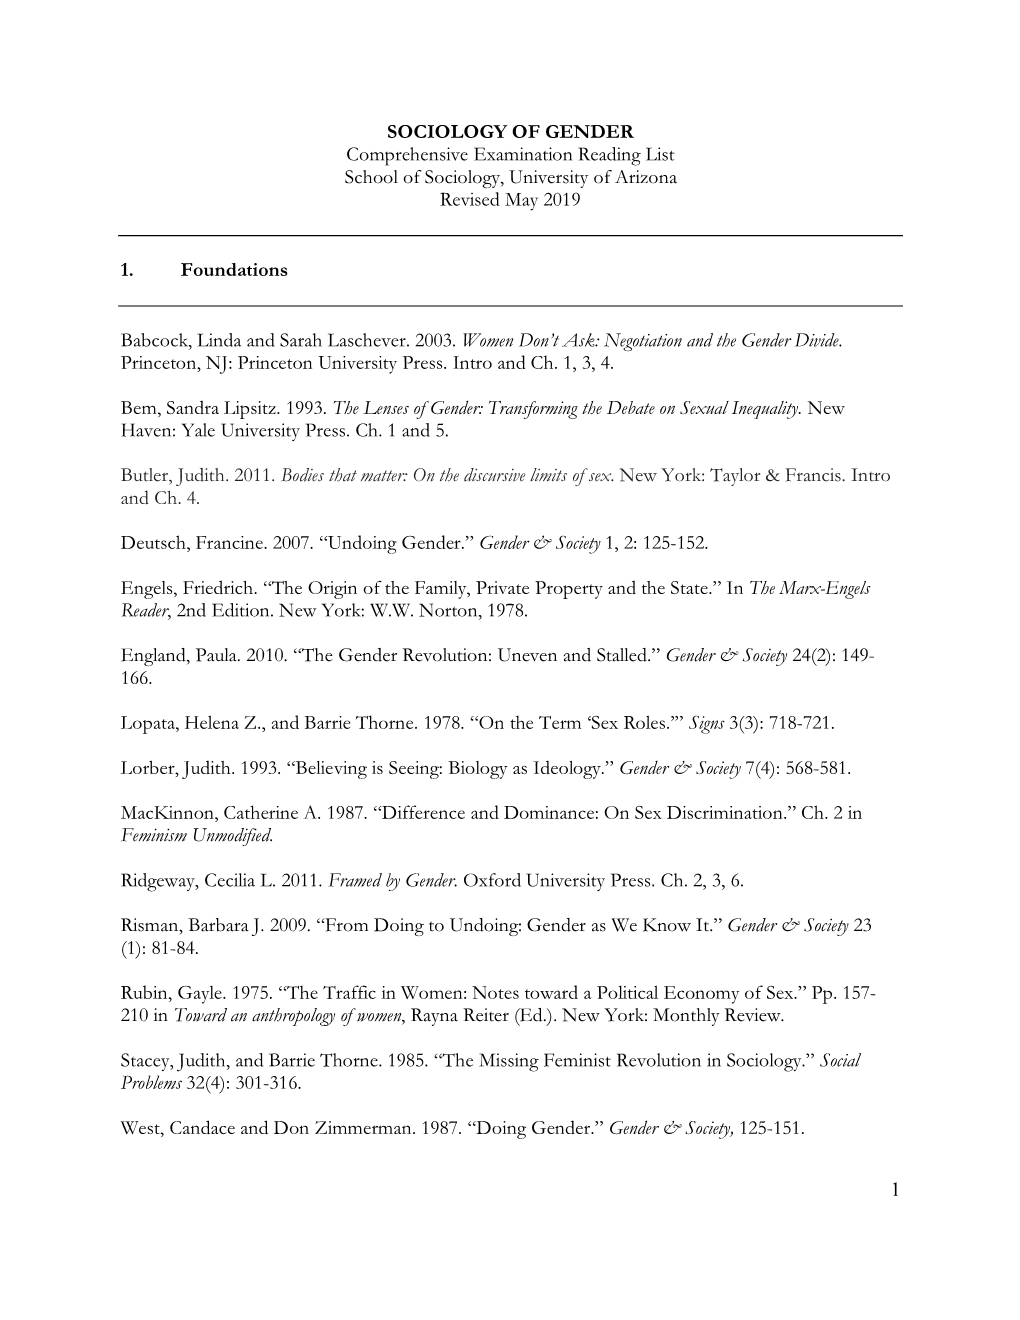 GENDER Comprehensive Examination Reading List School of Sociology, University of Arizona Revised May 2019